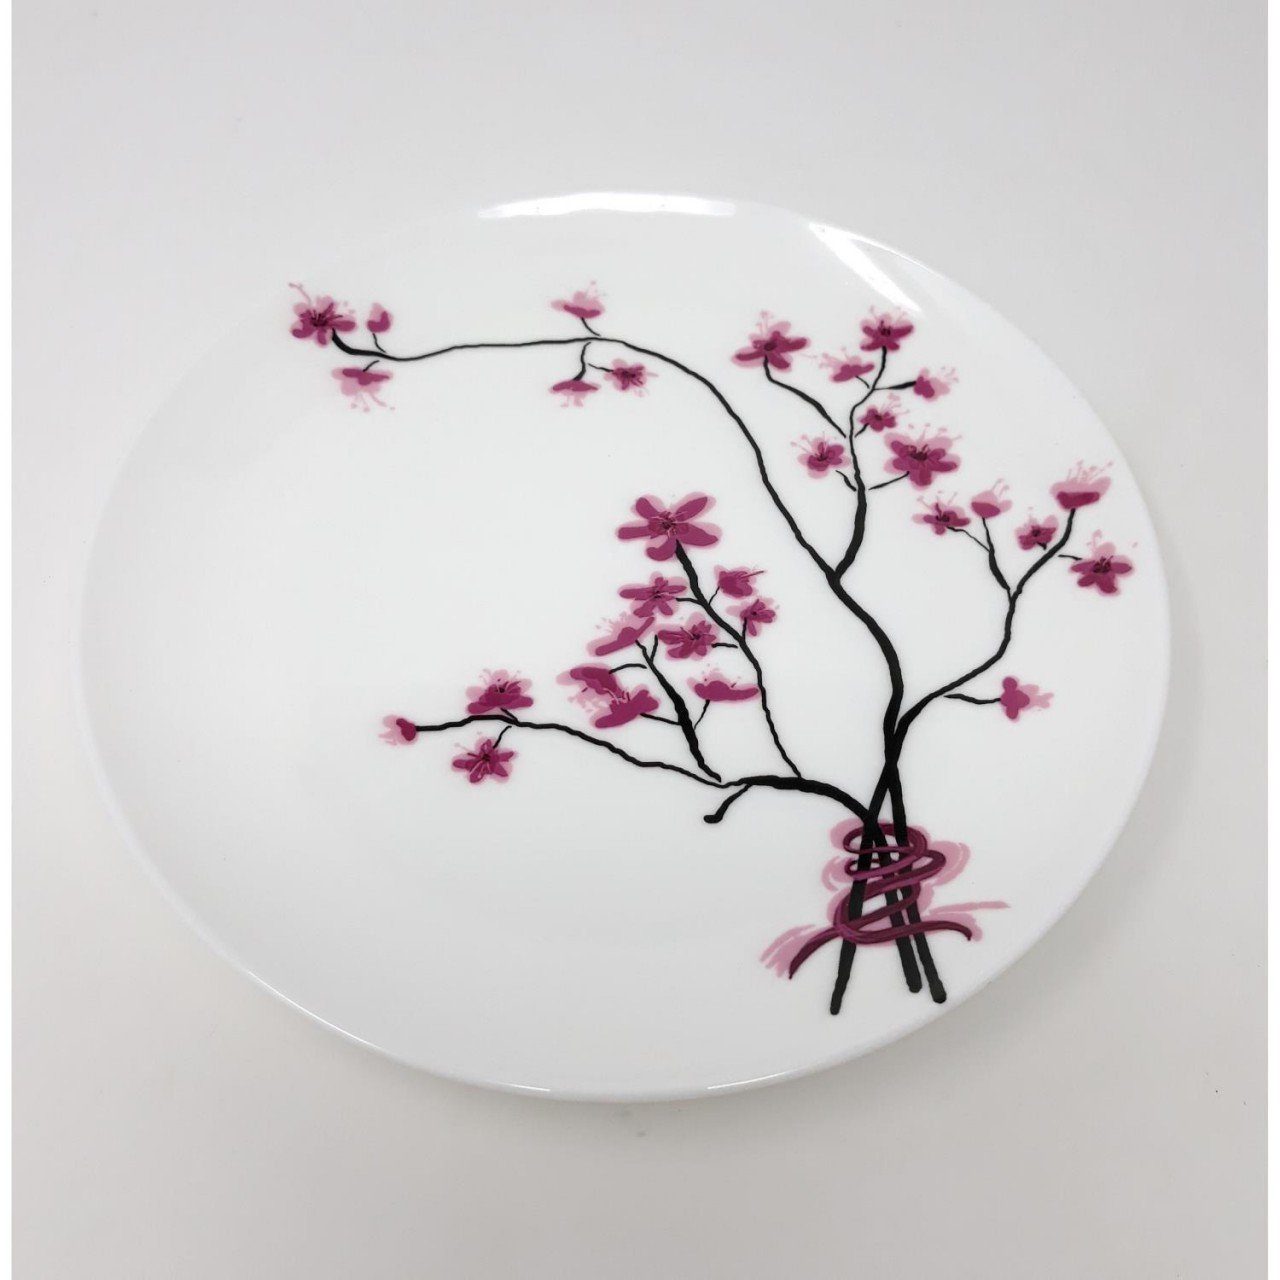 Blossom, Weiß D:19cm H:2cm Dessertteller TeaLogic Porzellan Cherry